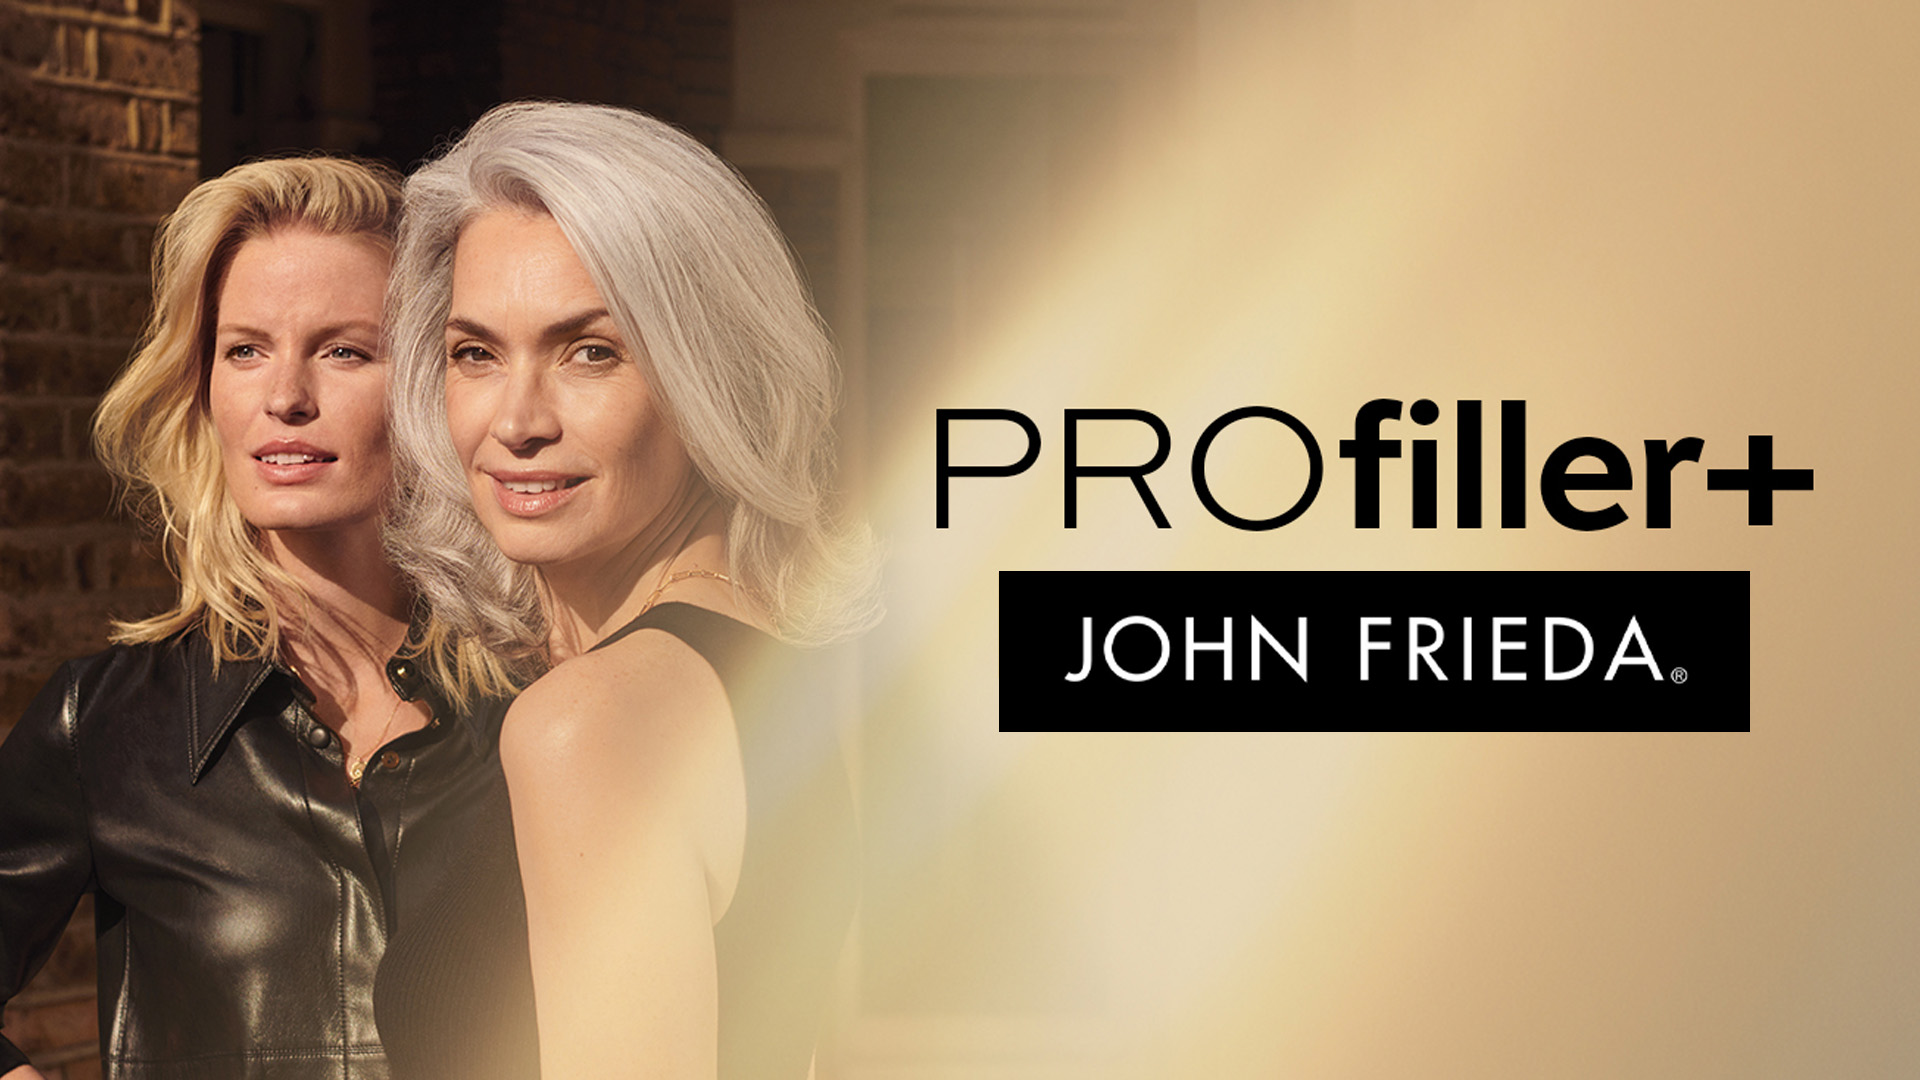 John Frieda Introduces Pro Filler: The Breakthrough in Hair Care